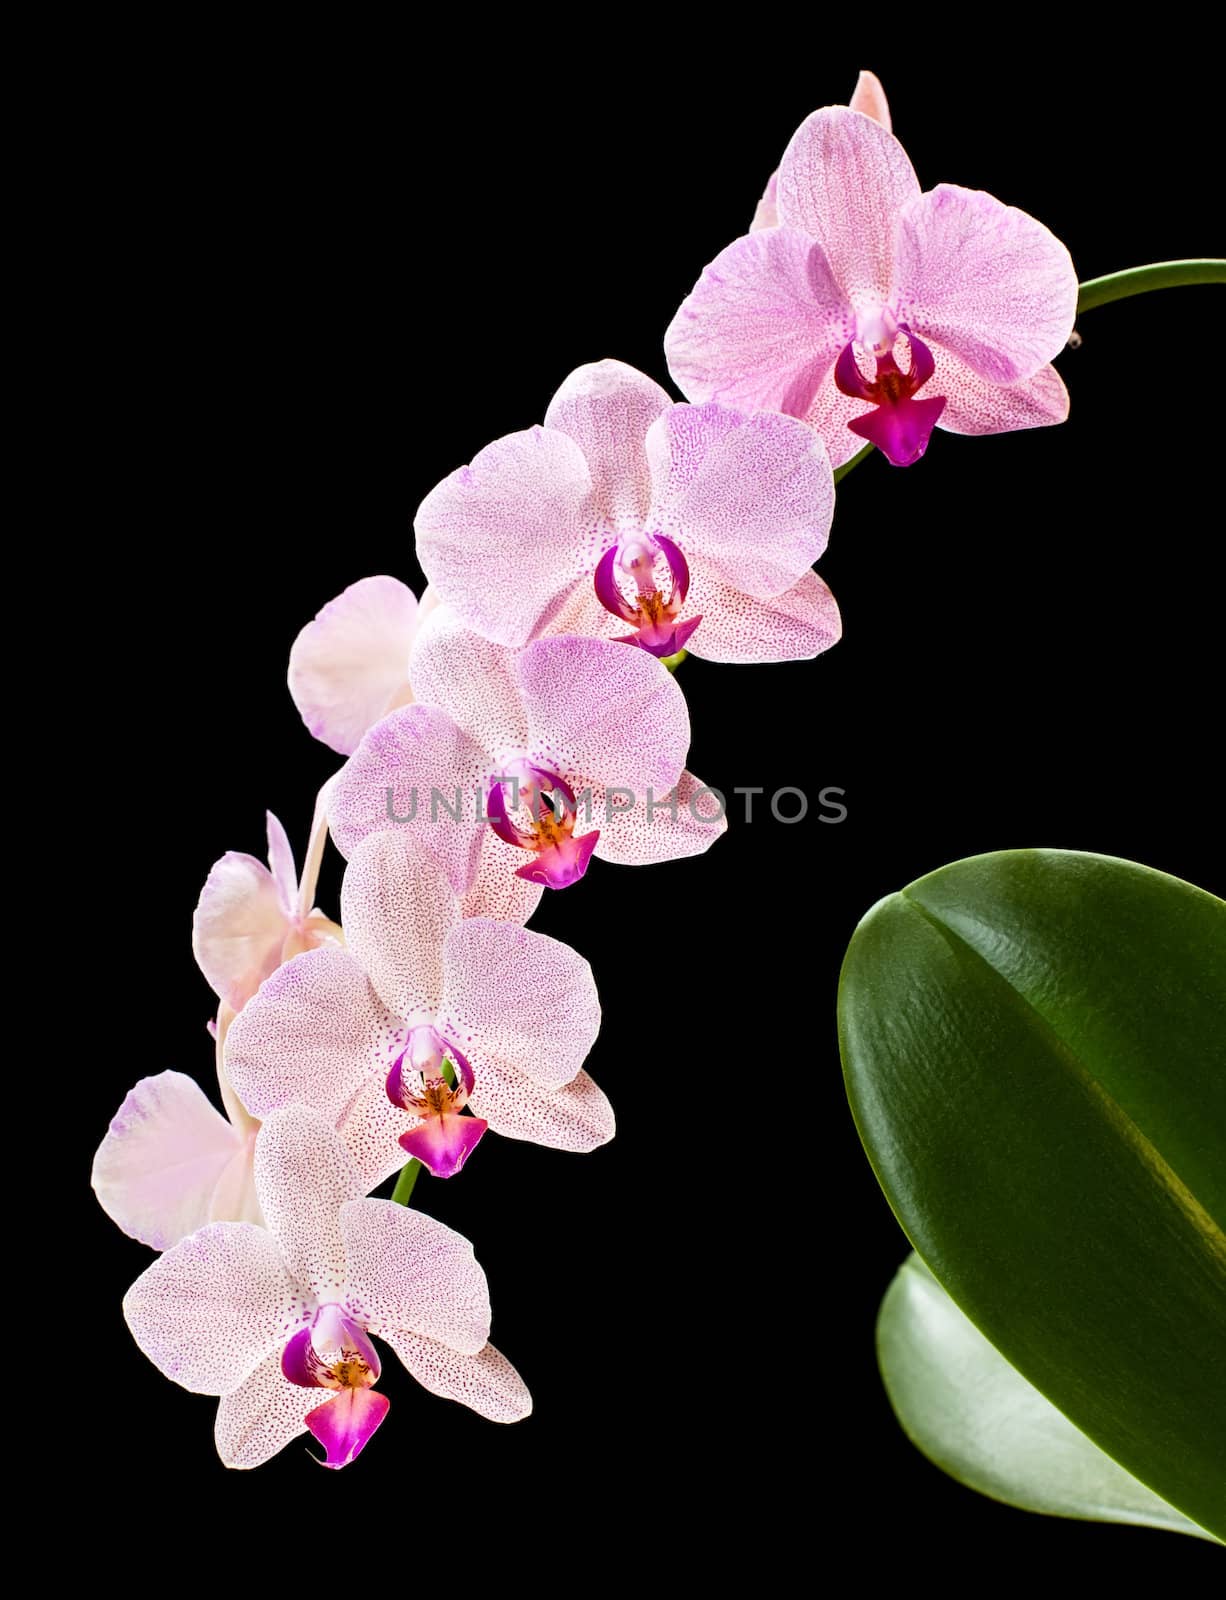 Phalaenopsis. Orchid on black background